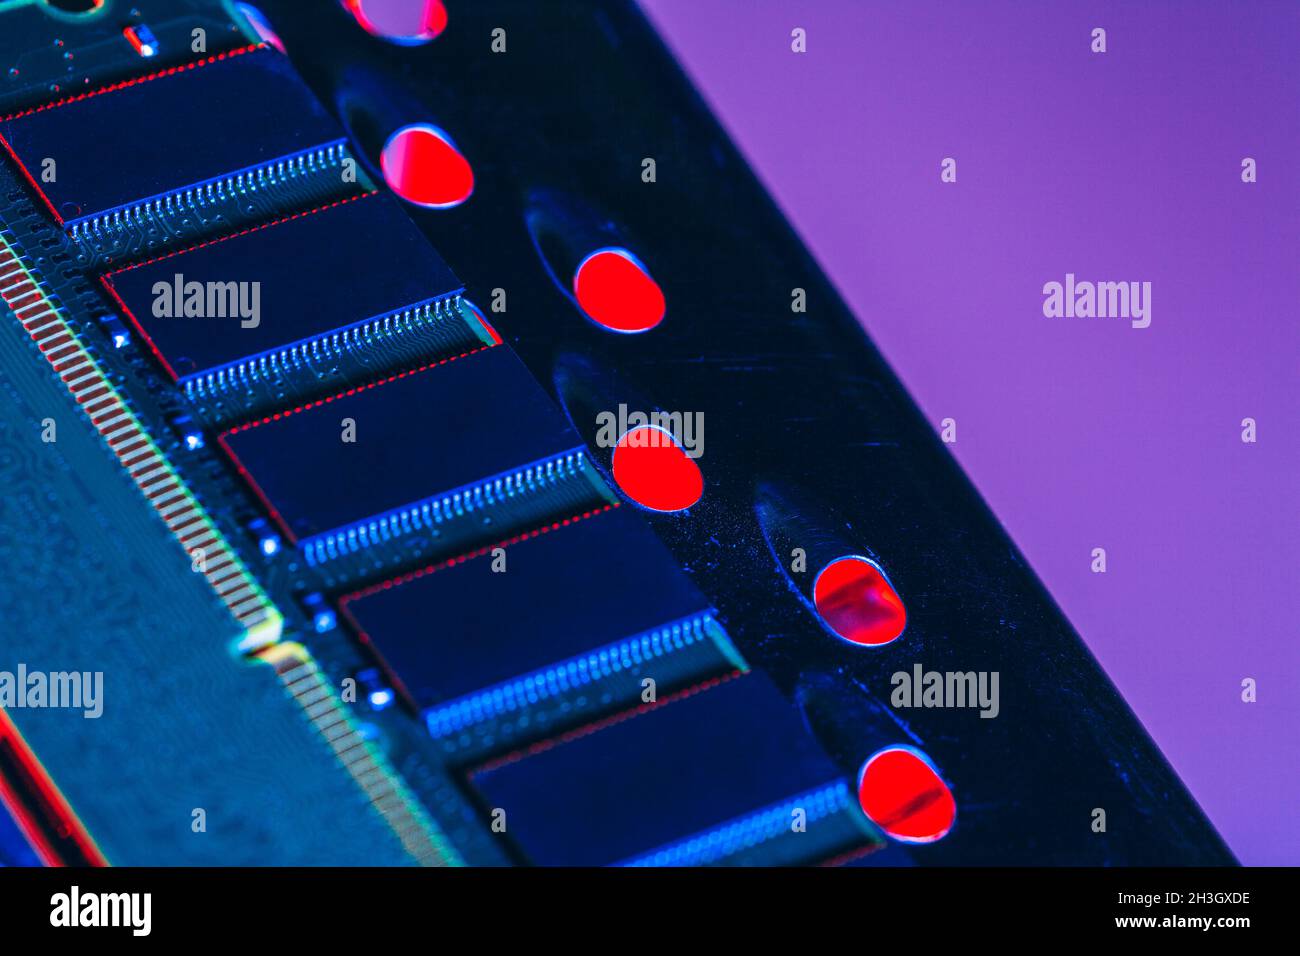 computer random access memory (RAM) close up Stock Photo